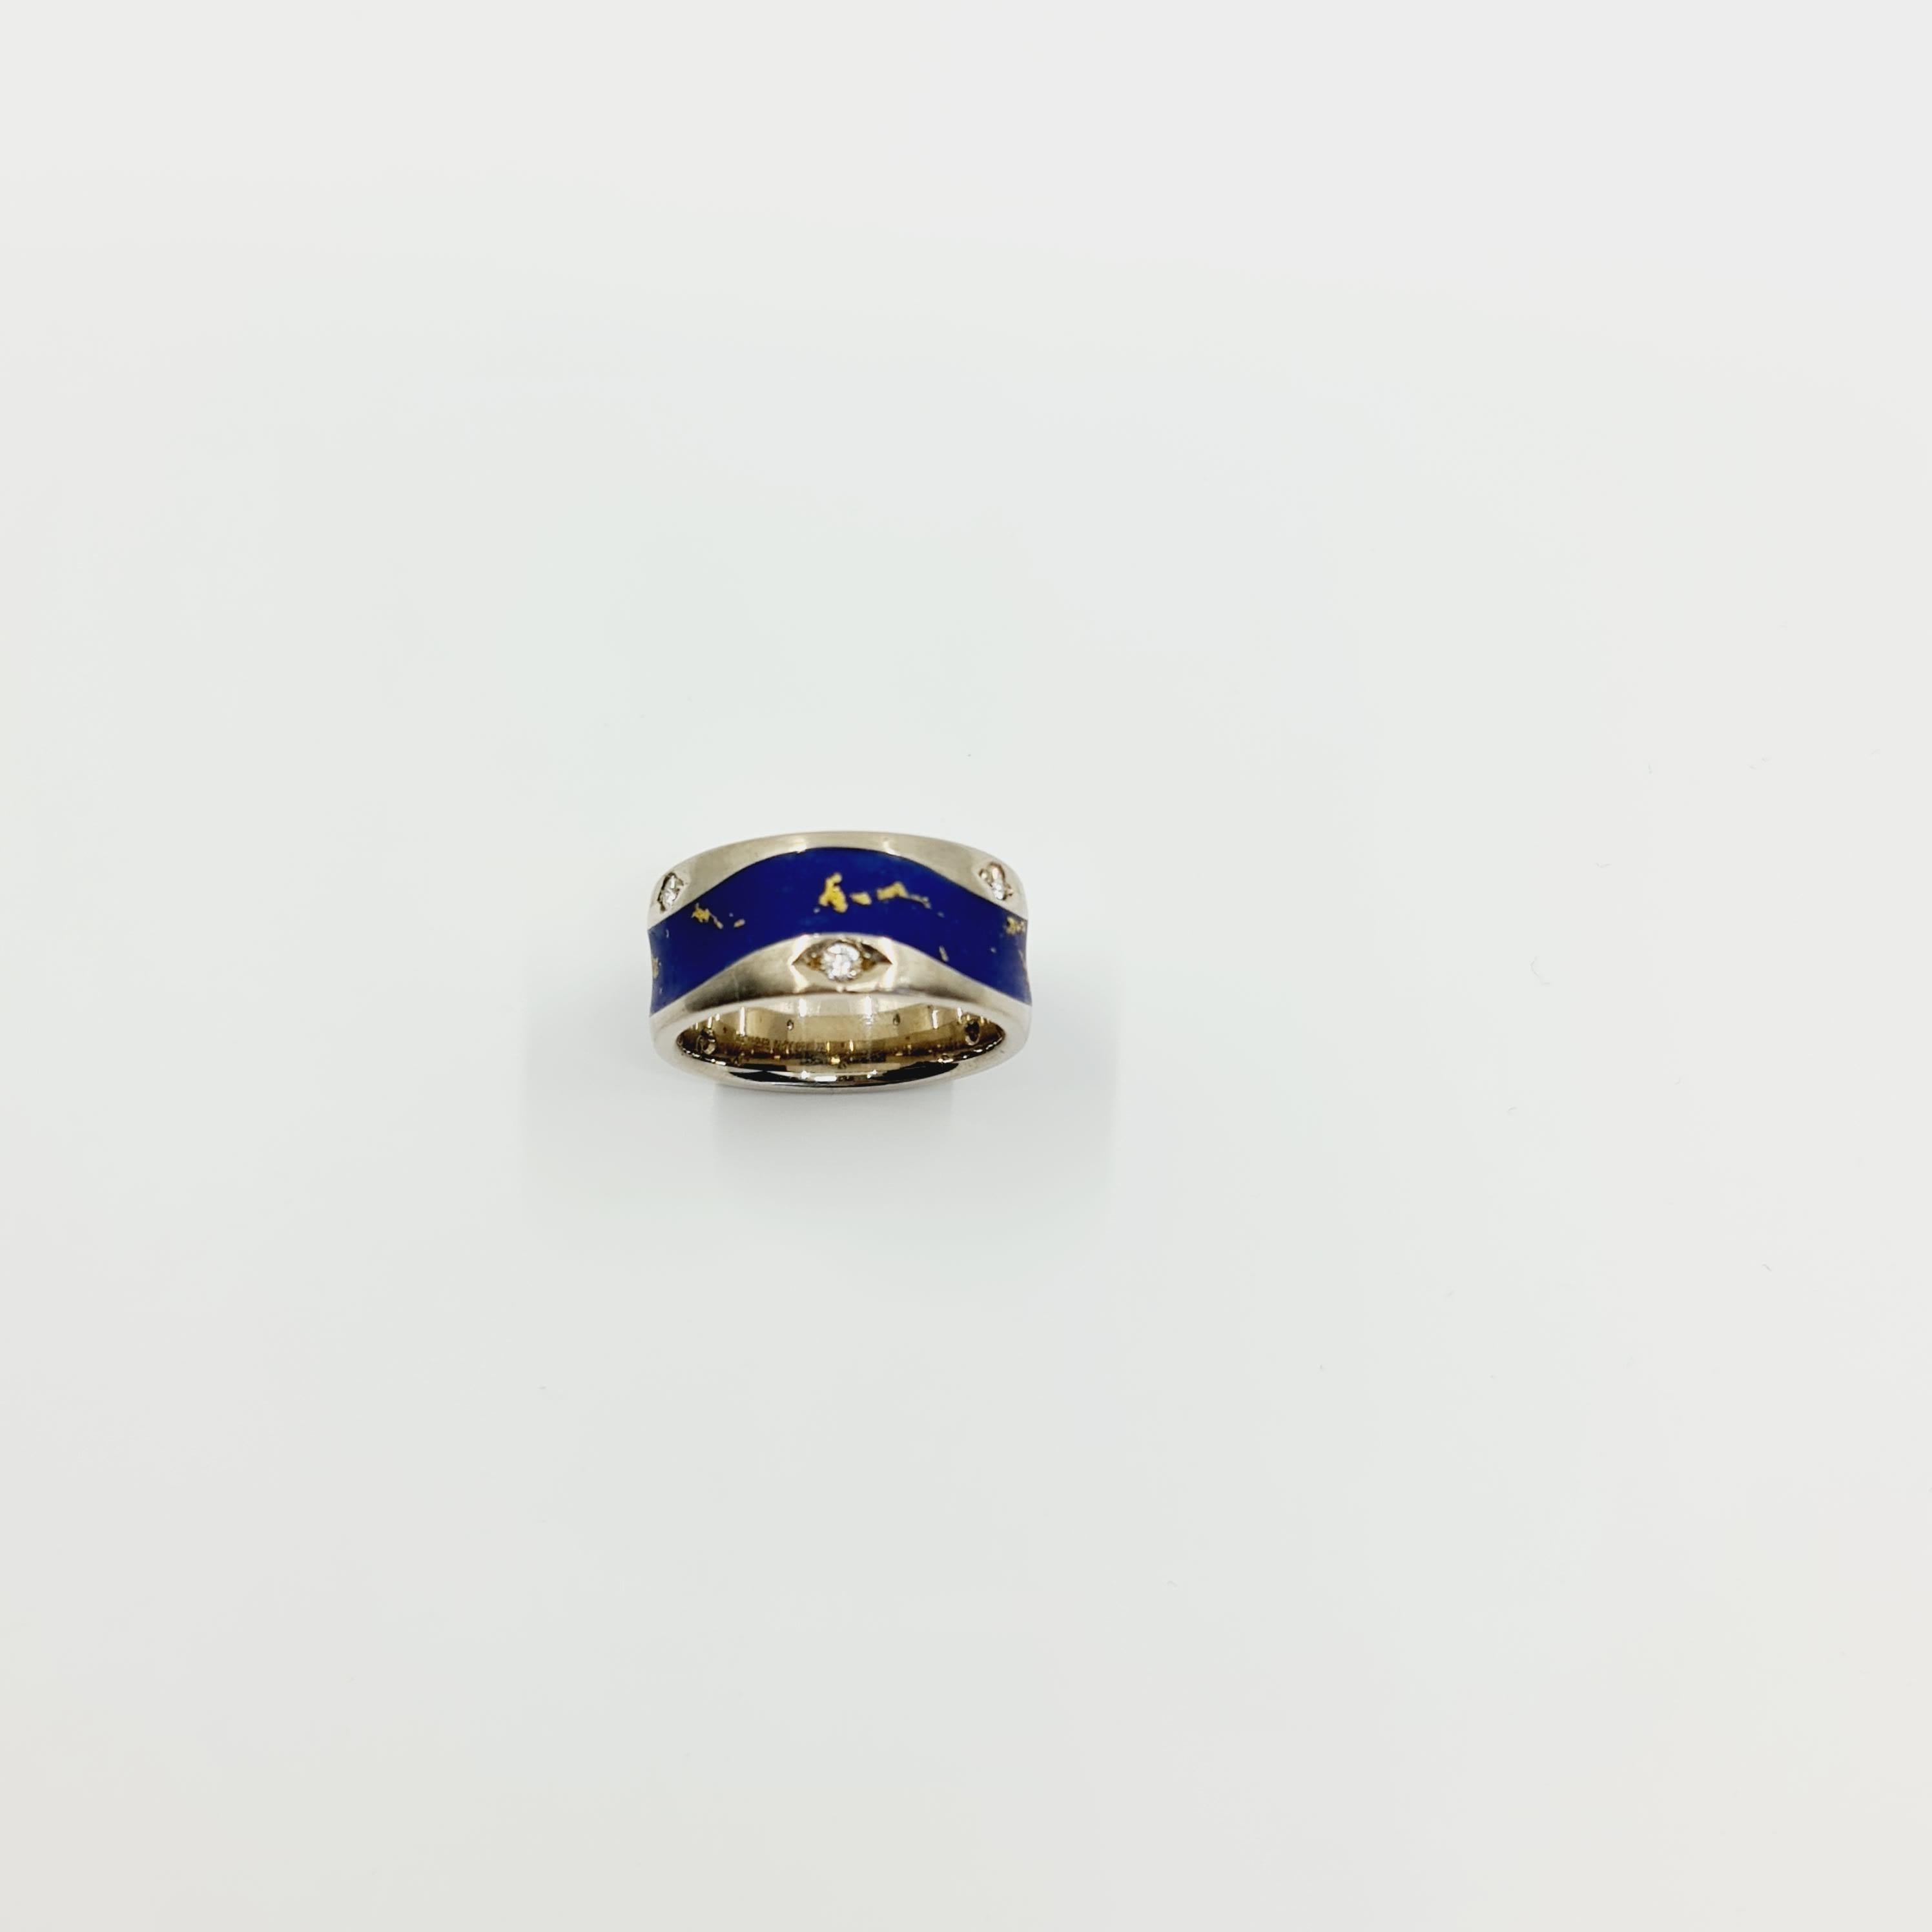 0.21 Carat Diamond Ring G/SI1 18k White Gold, Blue / Yellow Enamel, 6 Brillants For Sale 2